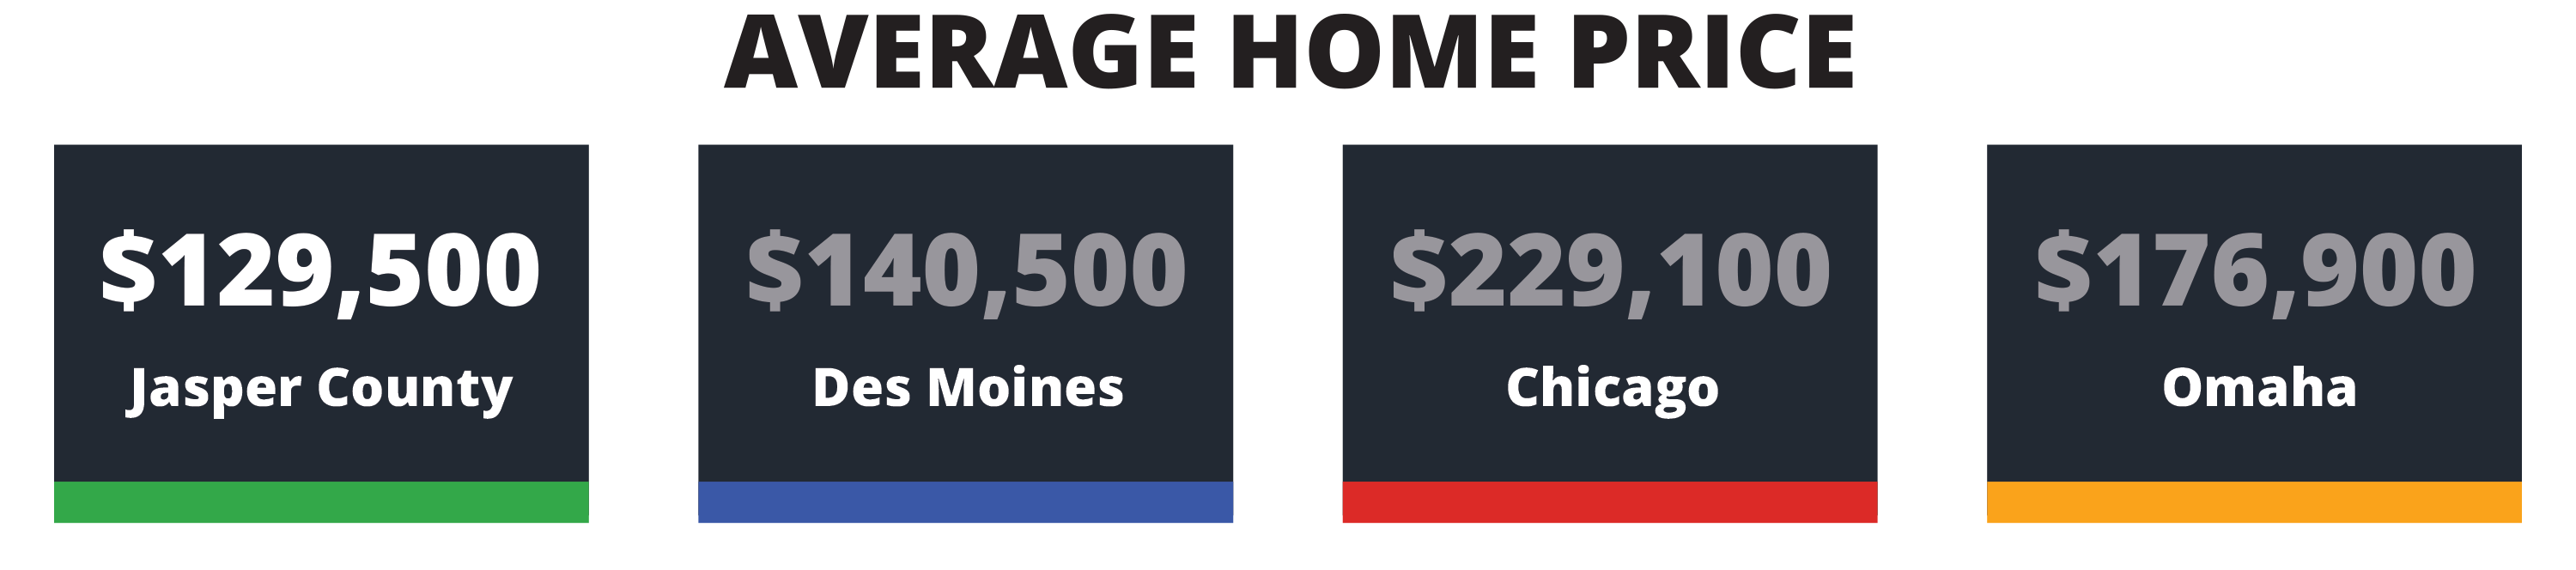 average home prices